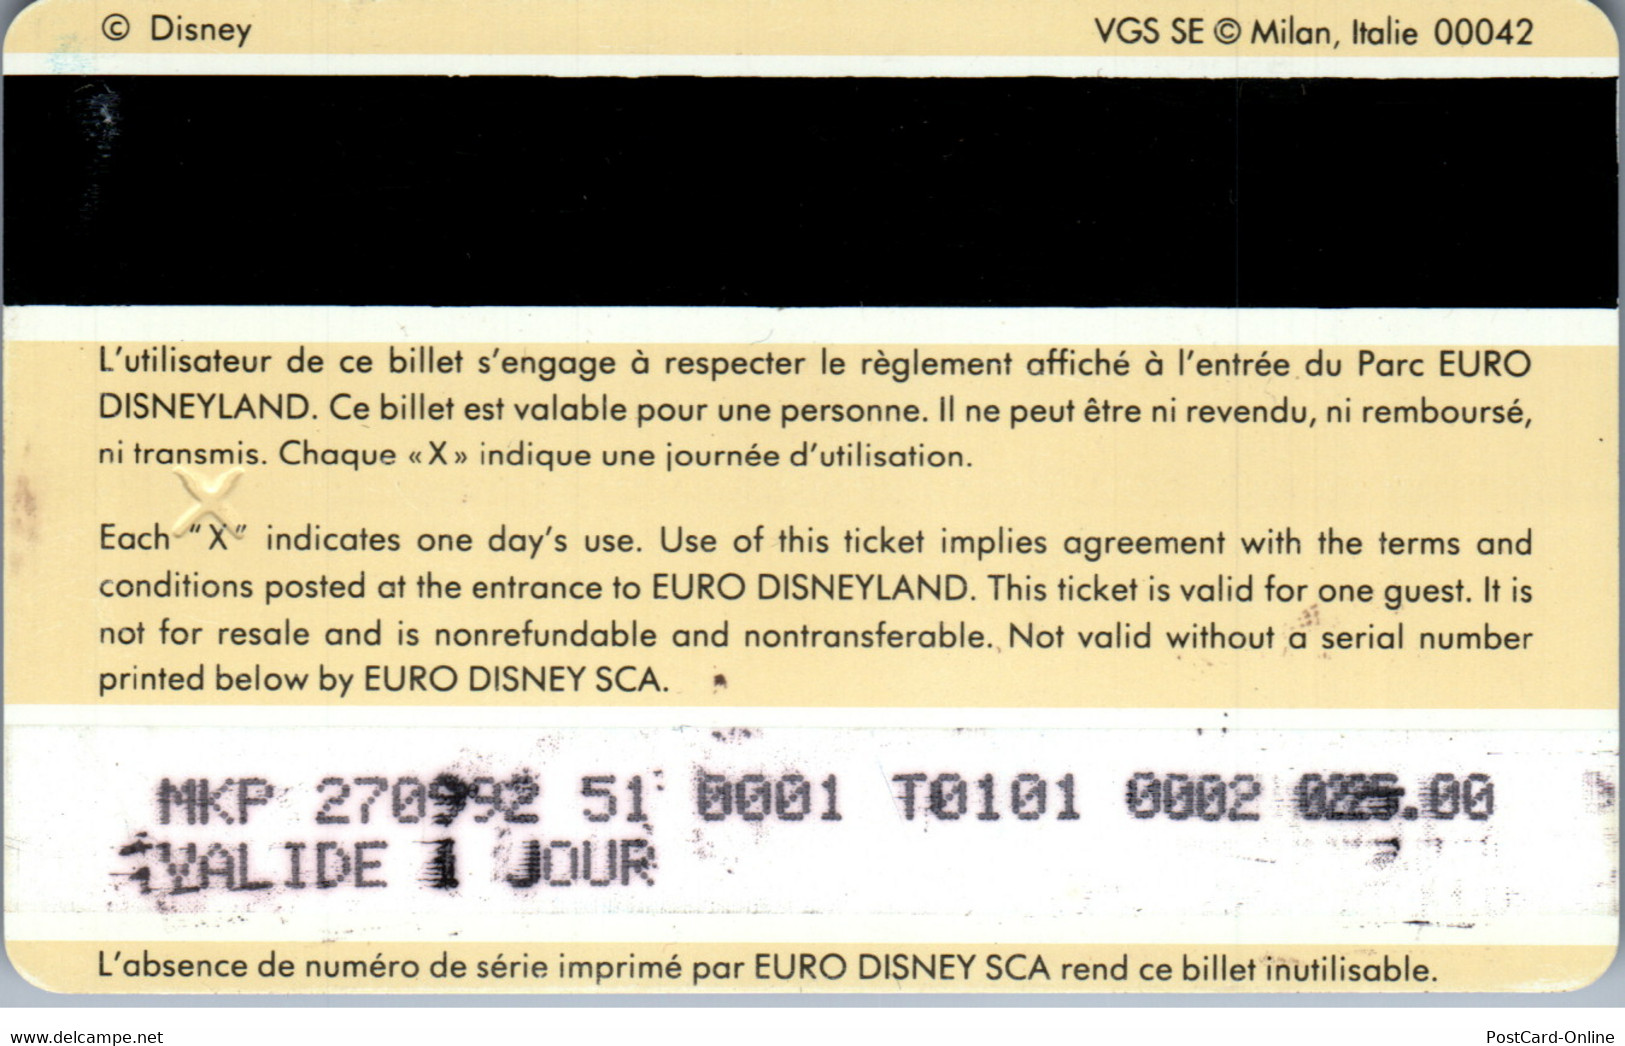 29339 - Frankreich - Euro Disneyland , Passeport - Passaporti  Disney